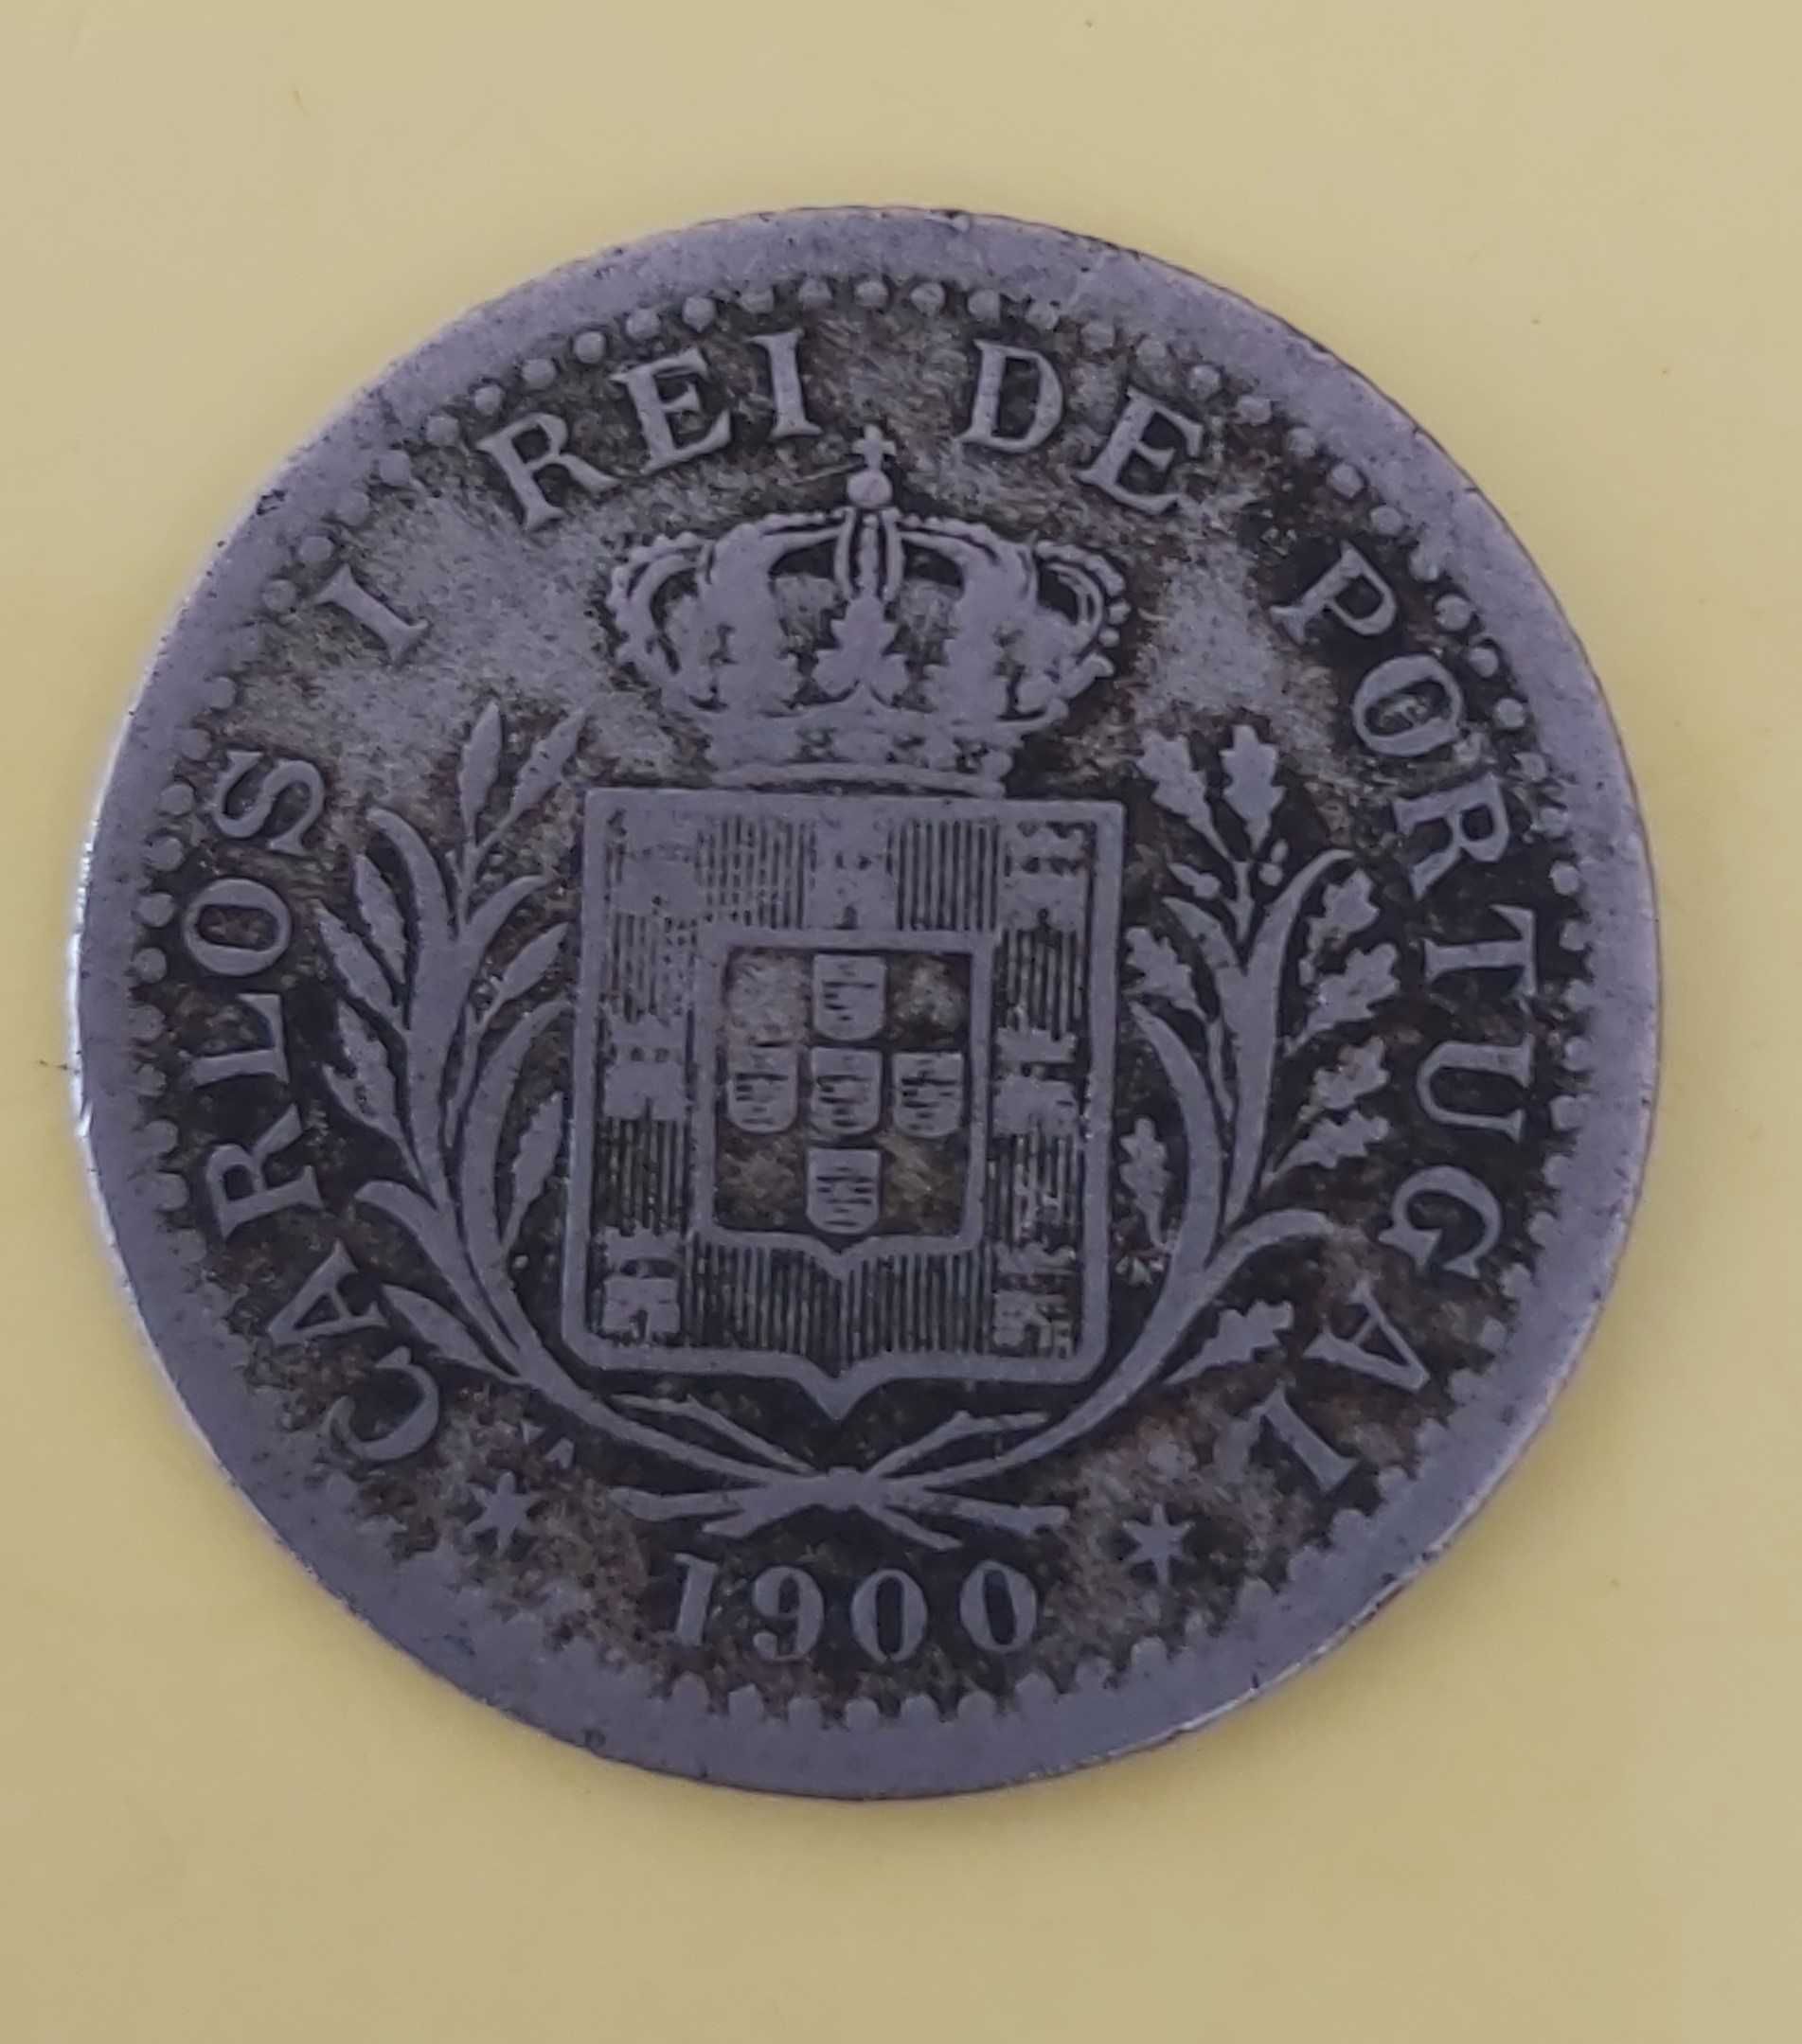 100 Reis de 1900, D. Carlos l